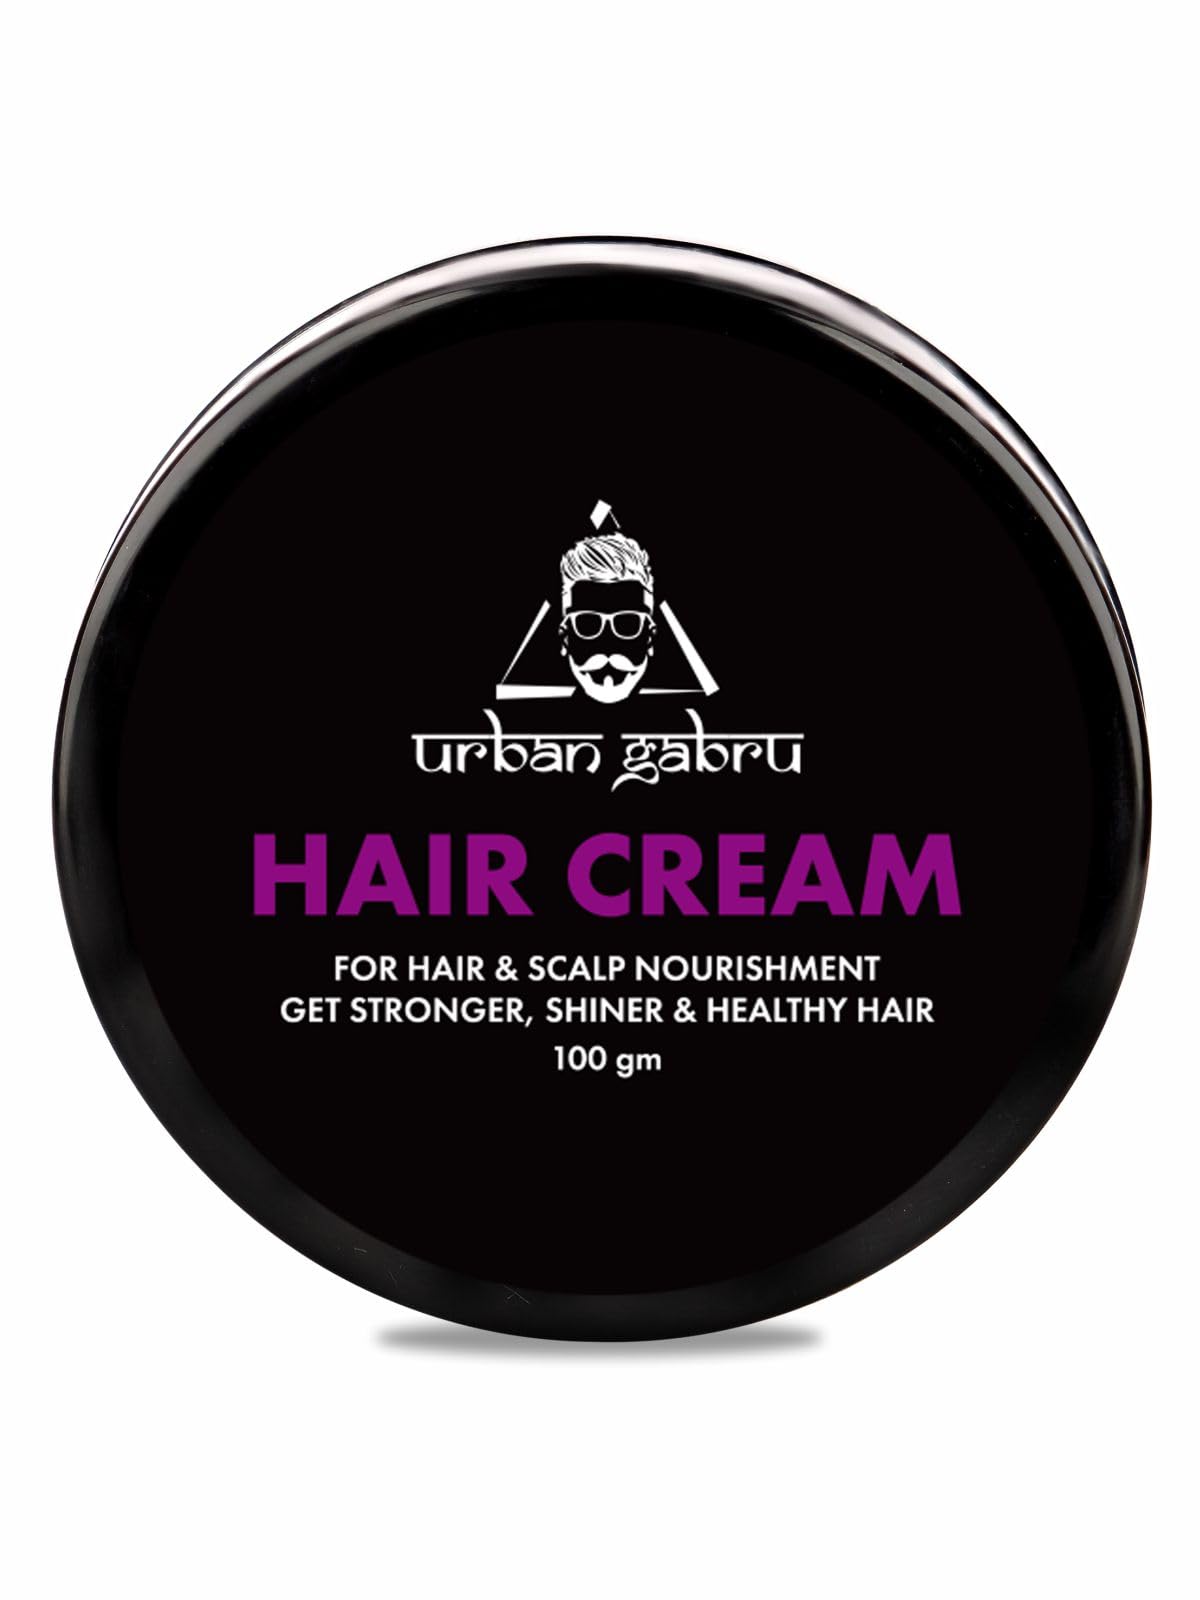 UrbanGabru Hair Growth Cream with Coconut, Aloe Vera & Protein for Hair Growth and Scalp Nourishment - Daily Use 100 gm